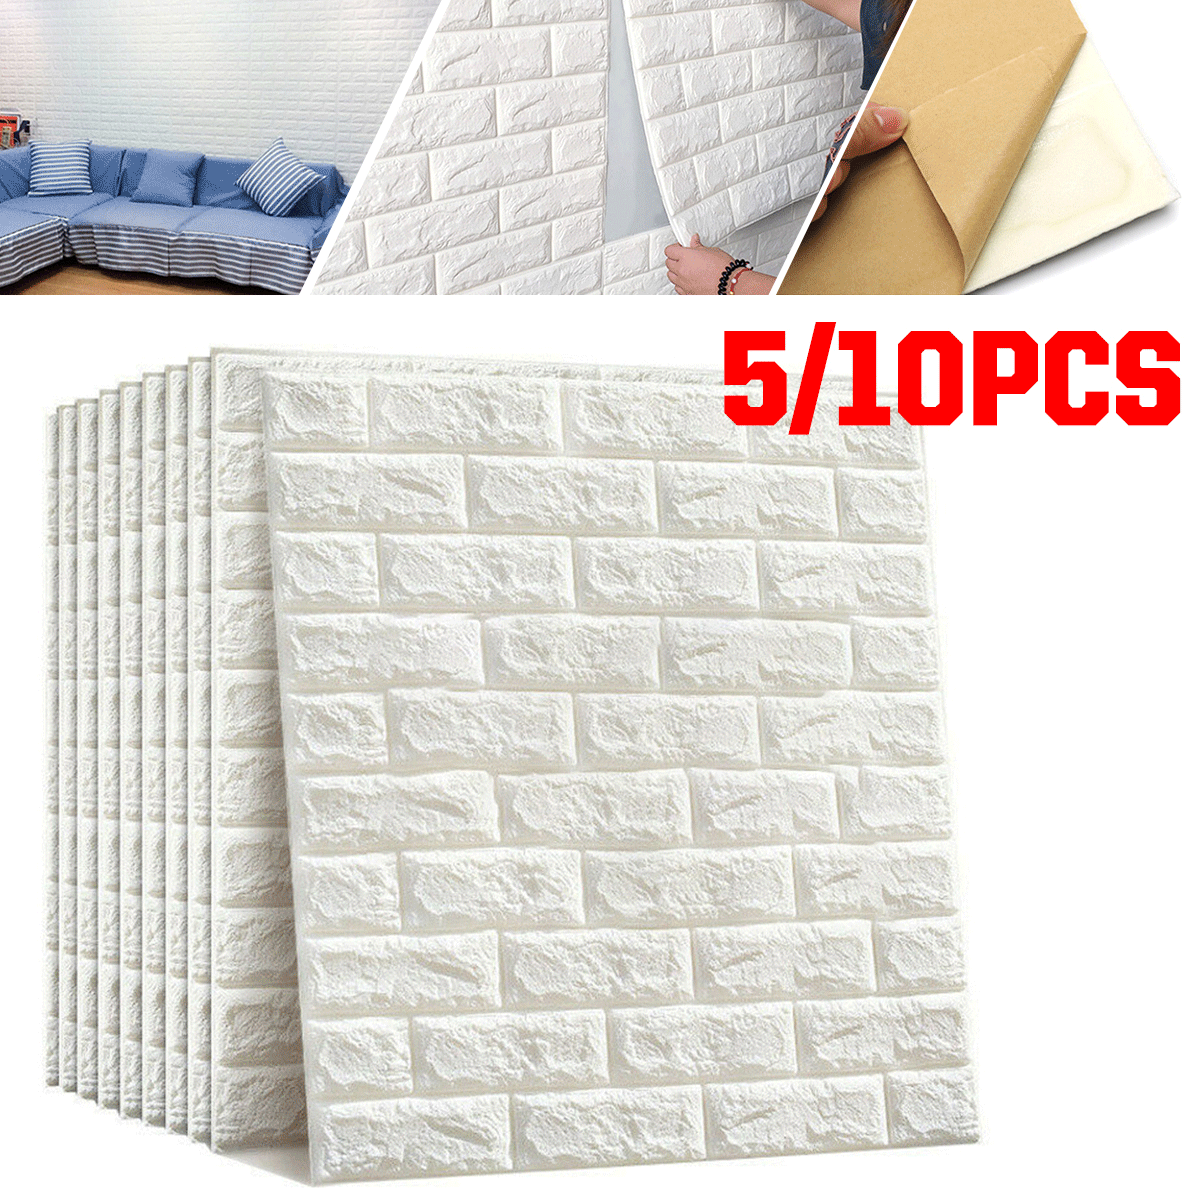 10Pcs 3D Self-adhesive Waterproof Tile Brick Wall sticker Foam Wallpaper Panel